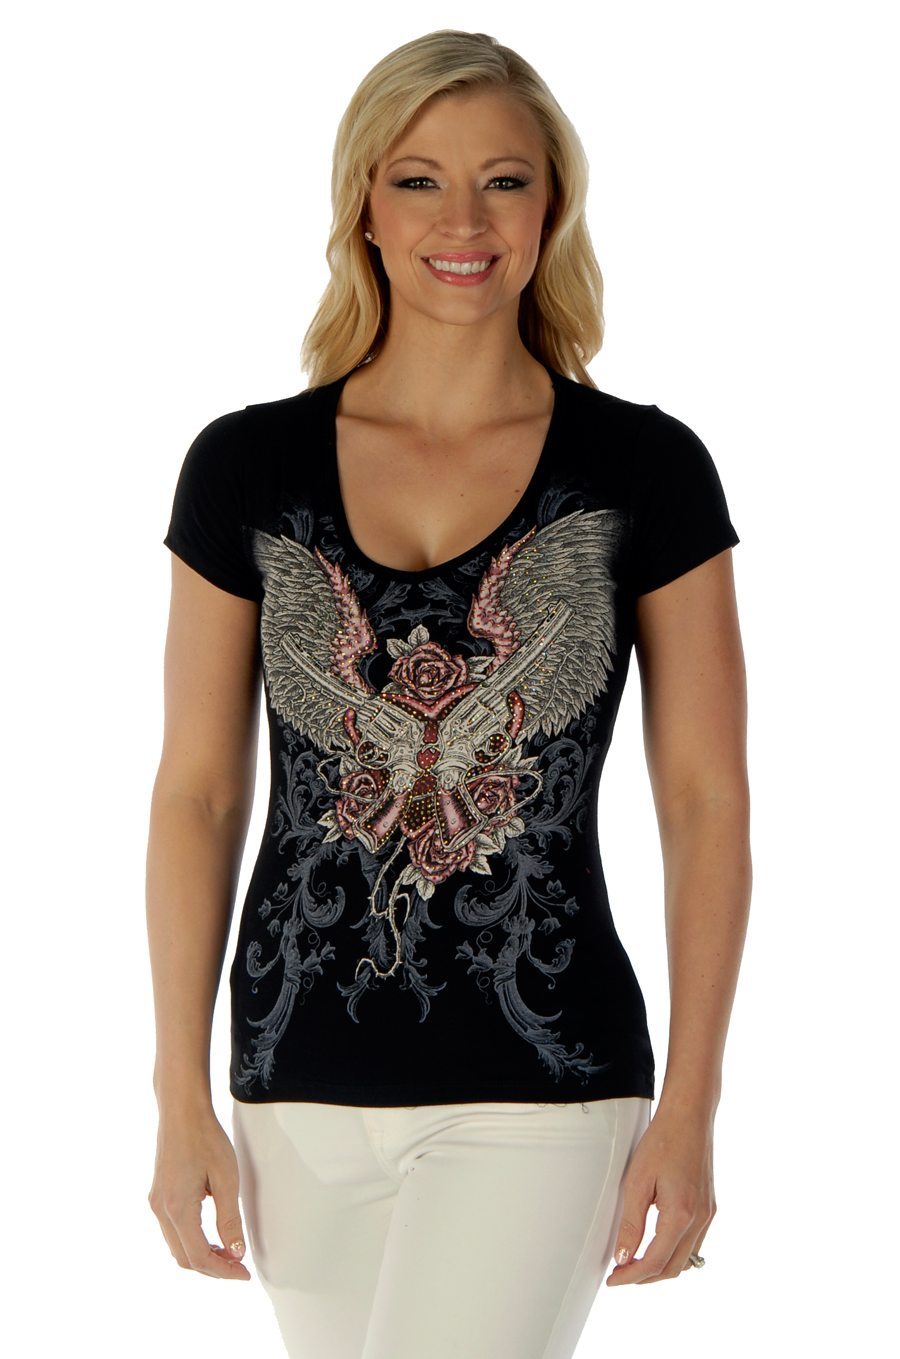 Liberty Wear Women's T-Shirt Guns & Wings Black Short Sleeve Front View